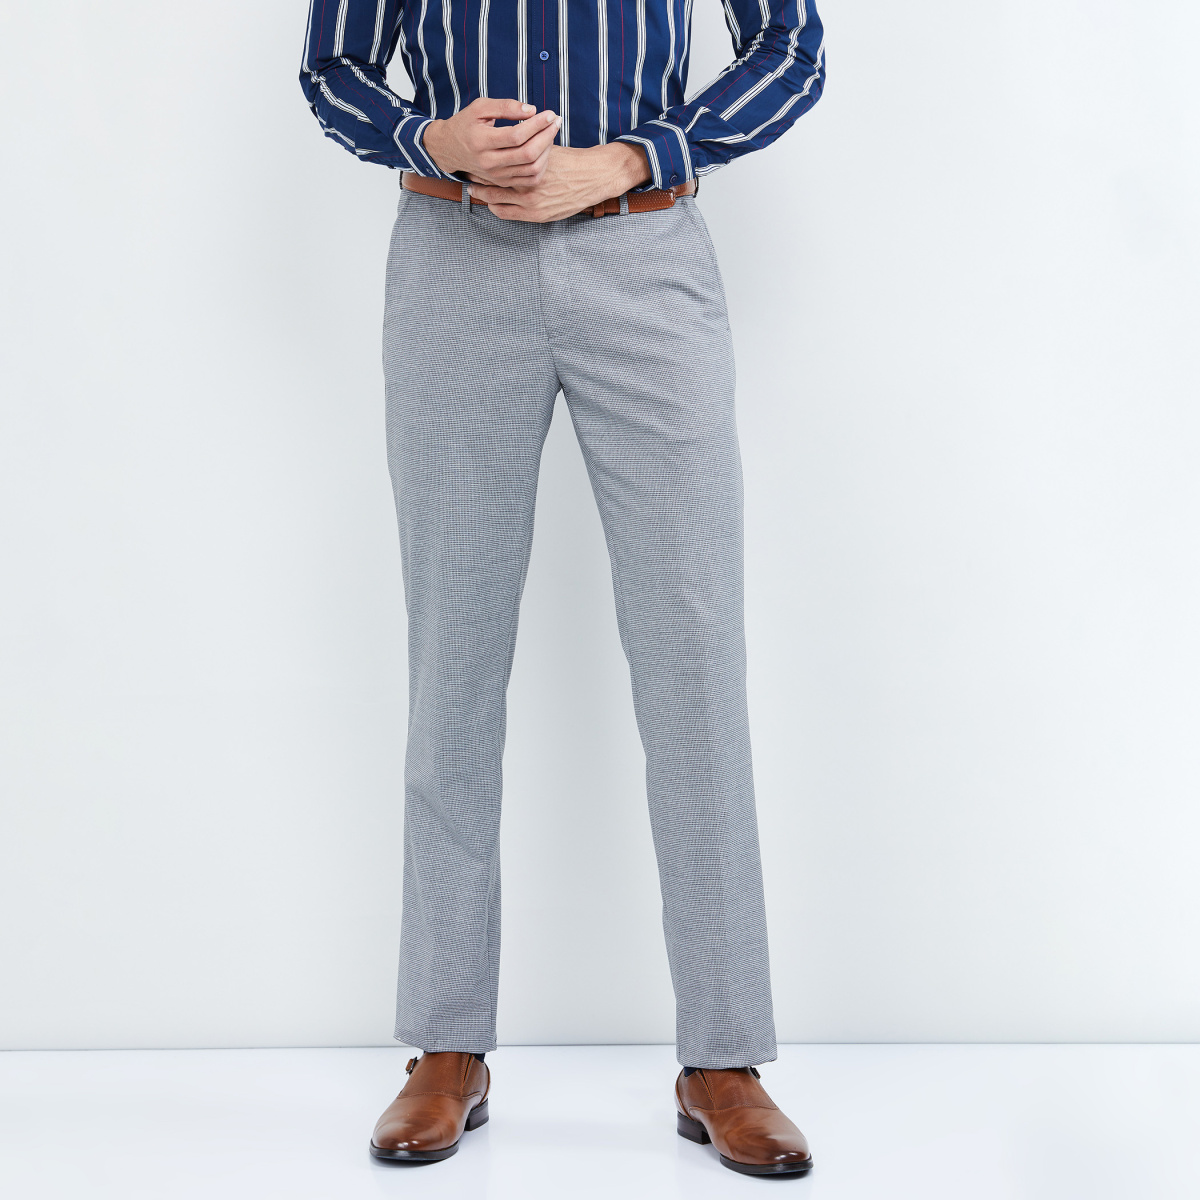 Buy VEI SASTRE Mens Slim Fit Formal TrousersPant 28 Beige at Amazonin